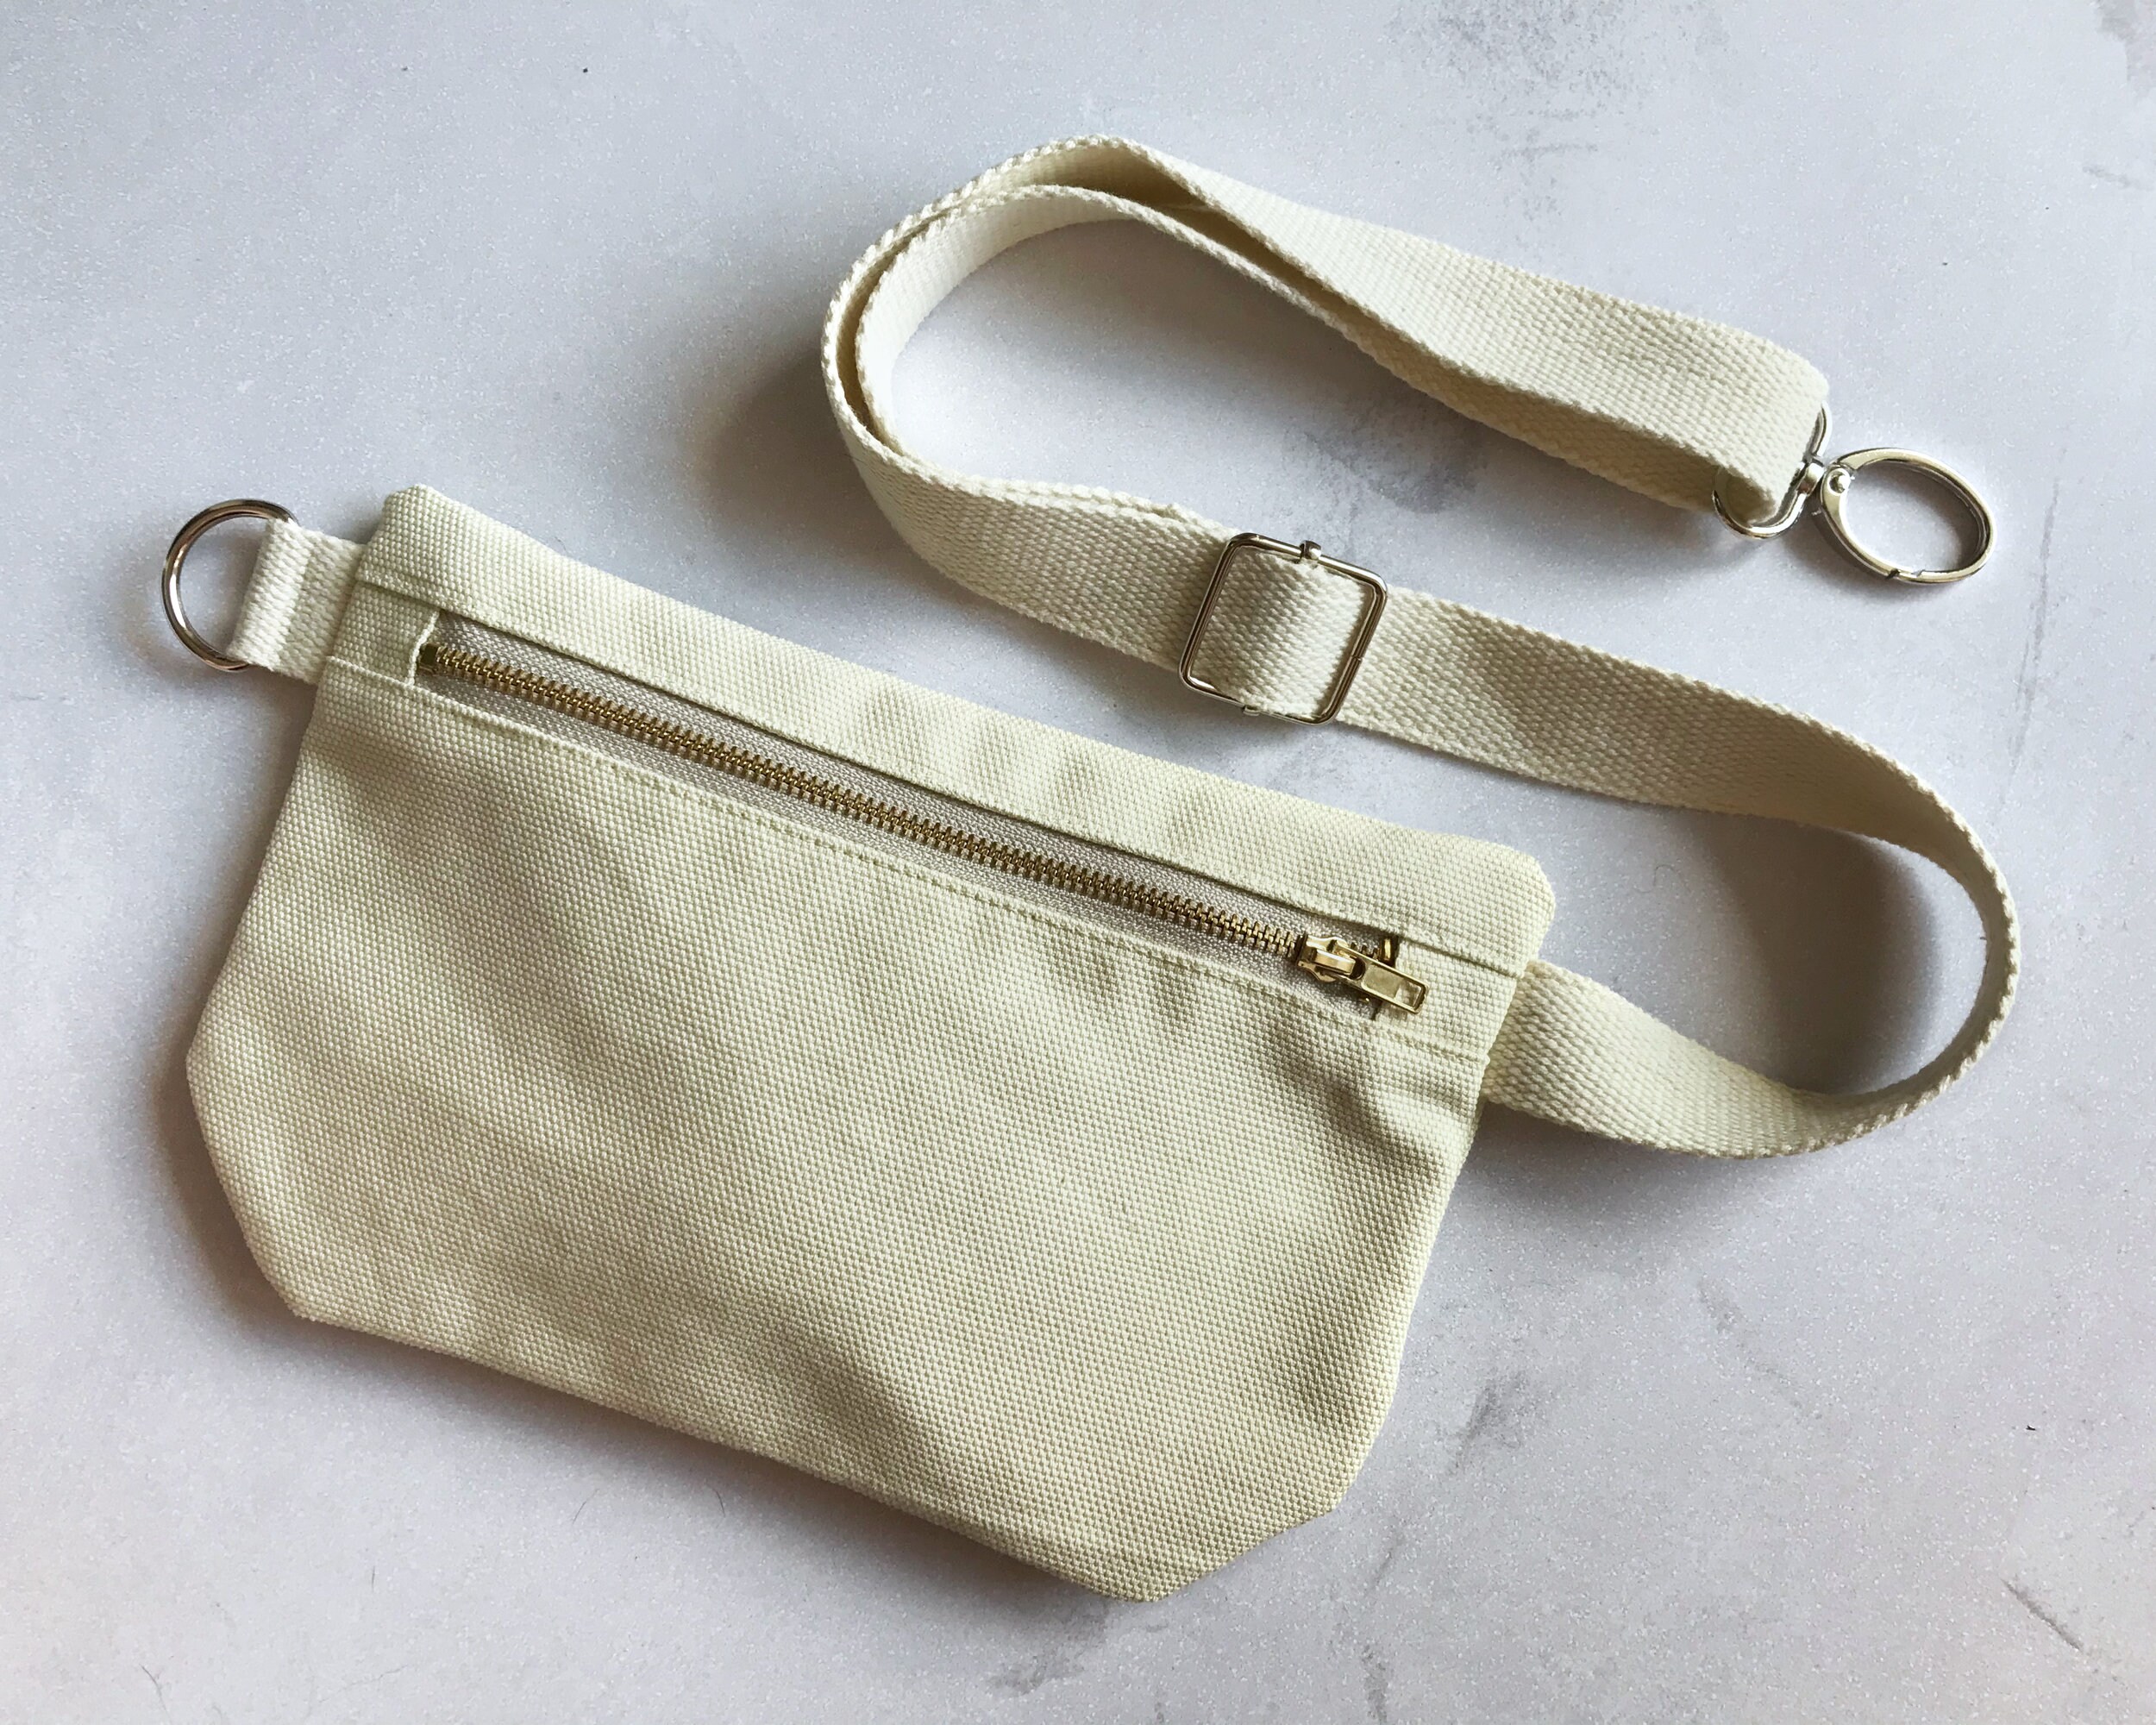 Fanny pack for women. Light beige hip belt bag from water | Etsy